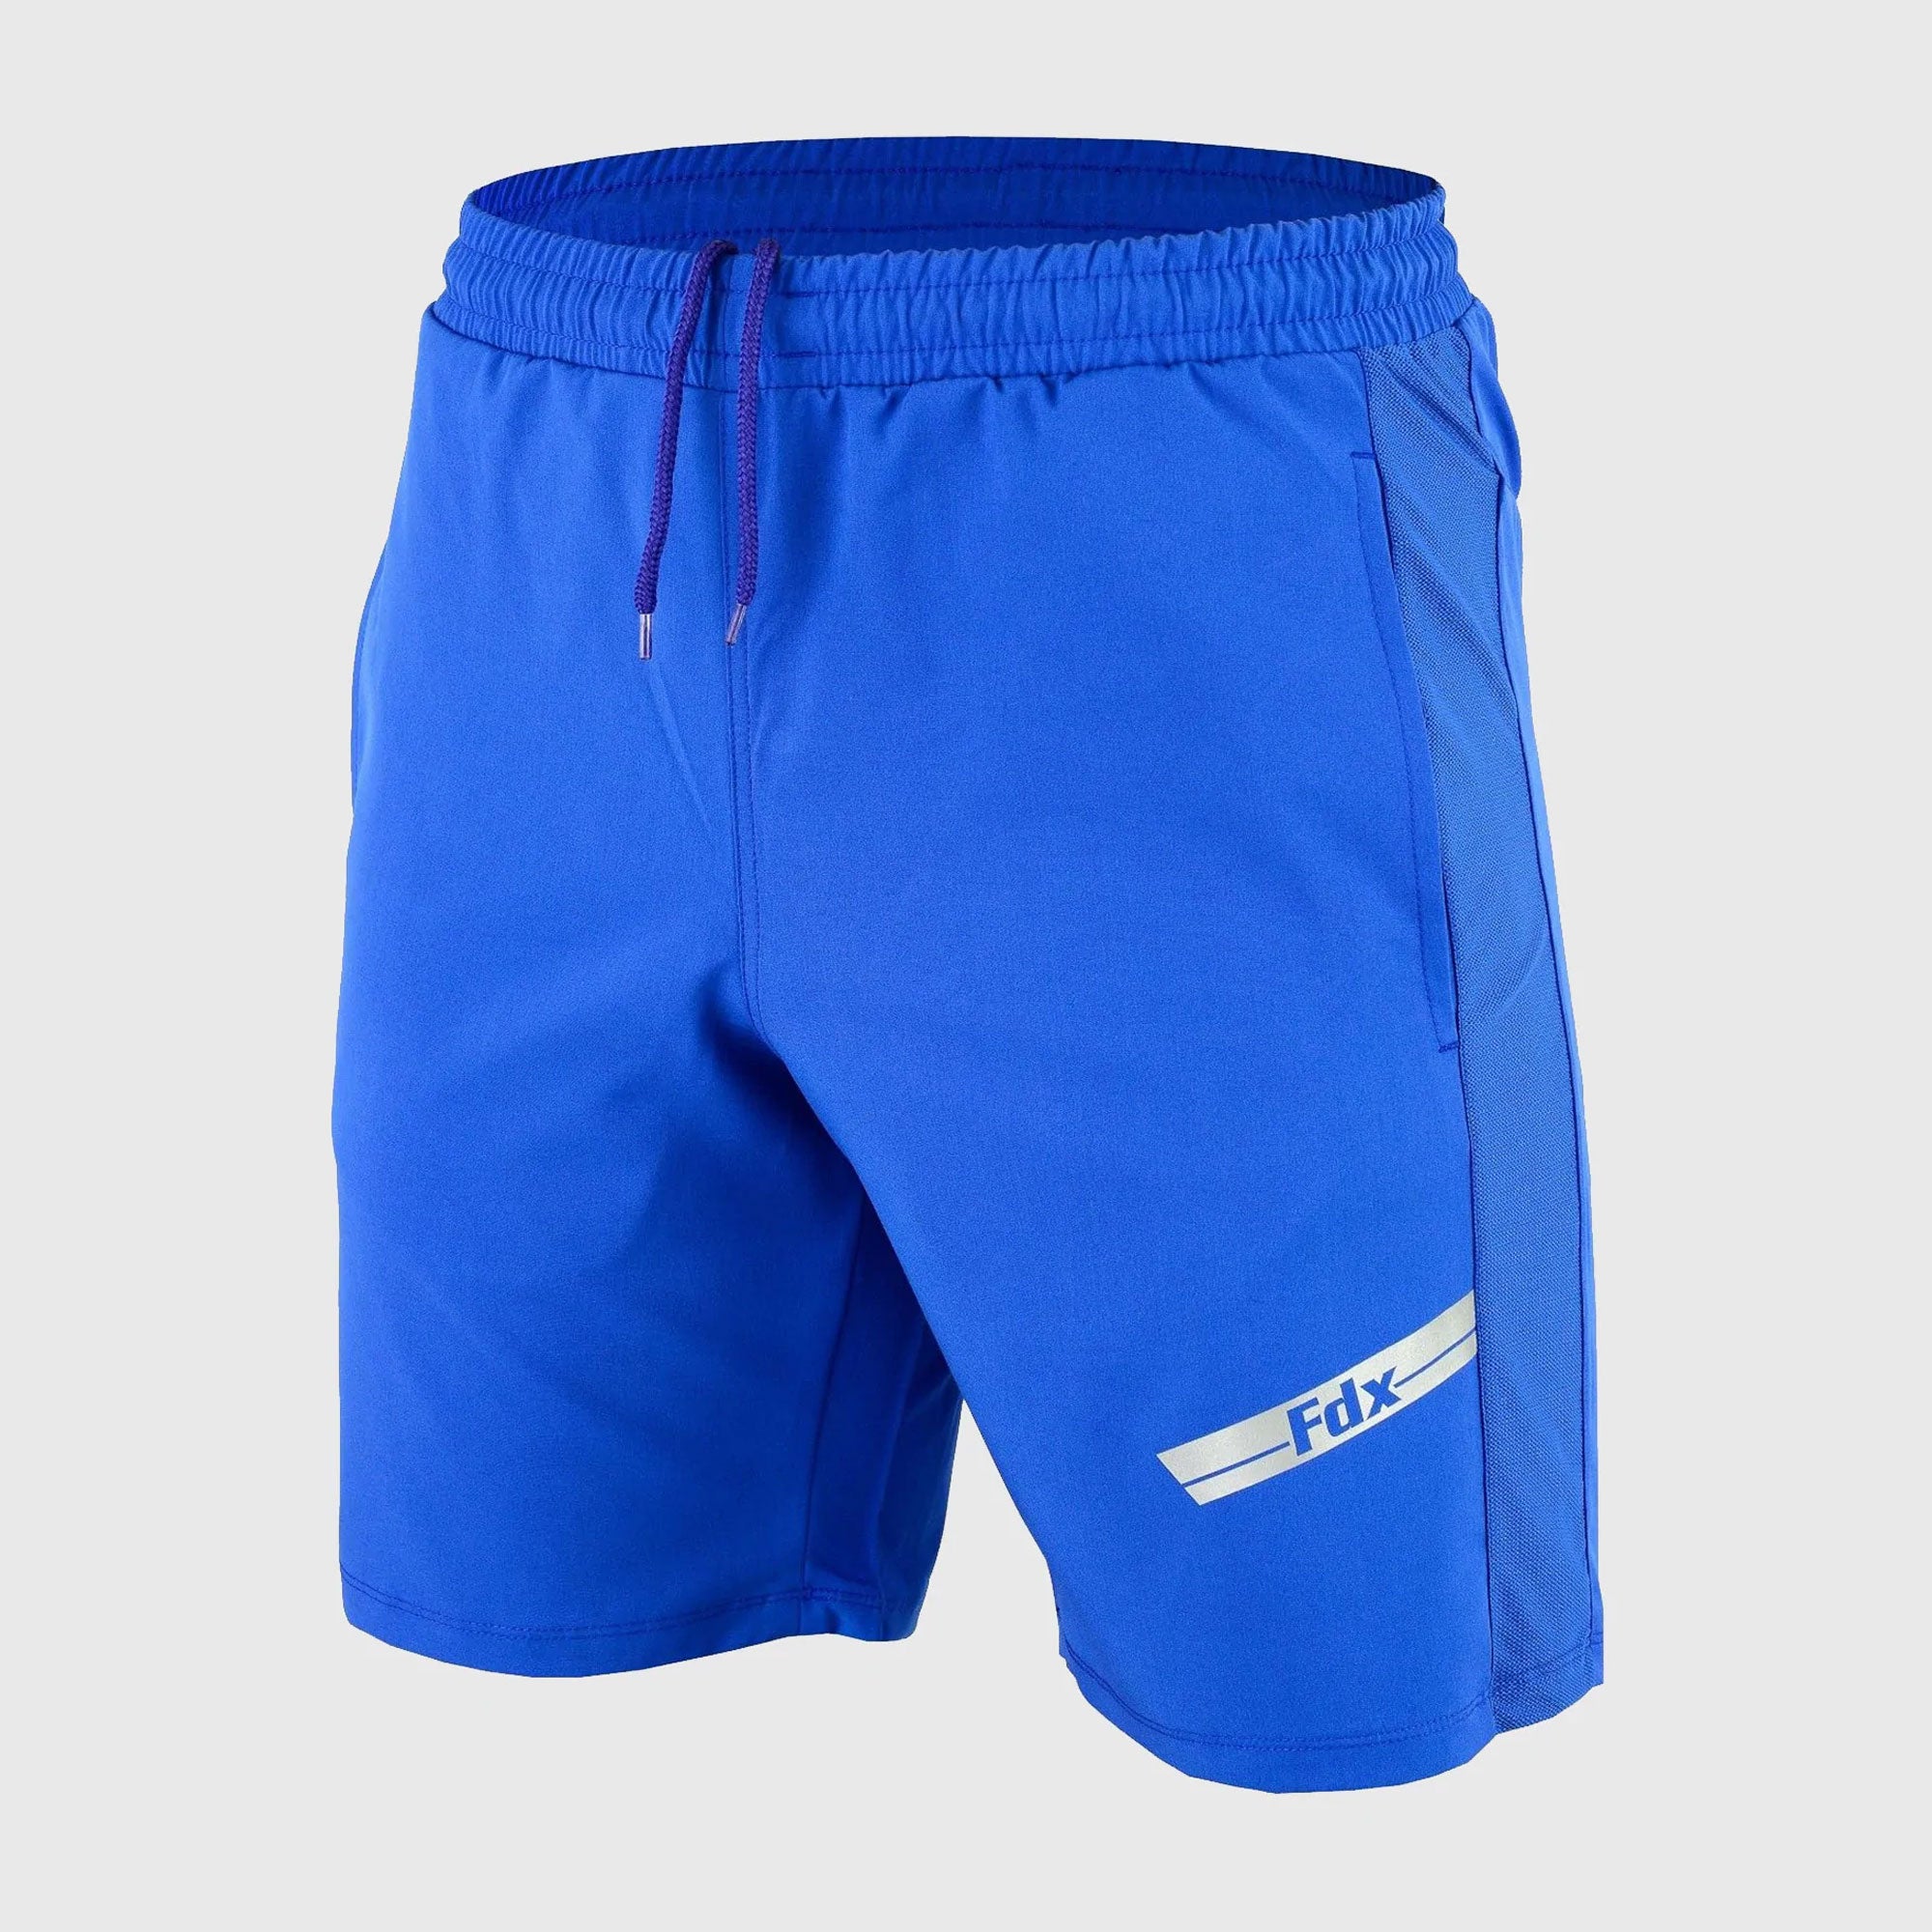 FDX Men's Blue Breathable Running Shorts Waist Belt Anti Odor Moisture Wicking & Perfect for Trekking, Tennis, squash & Gym Sports & Outdoor